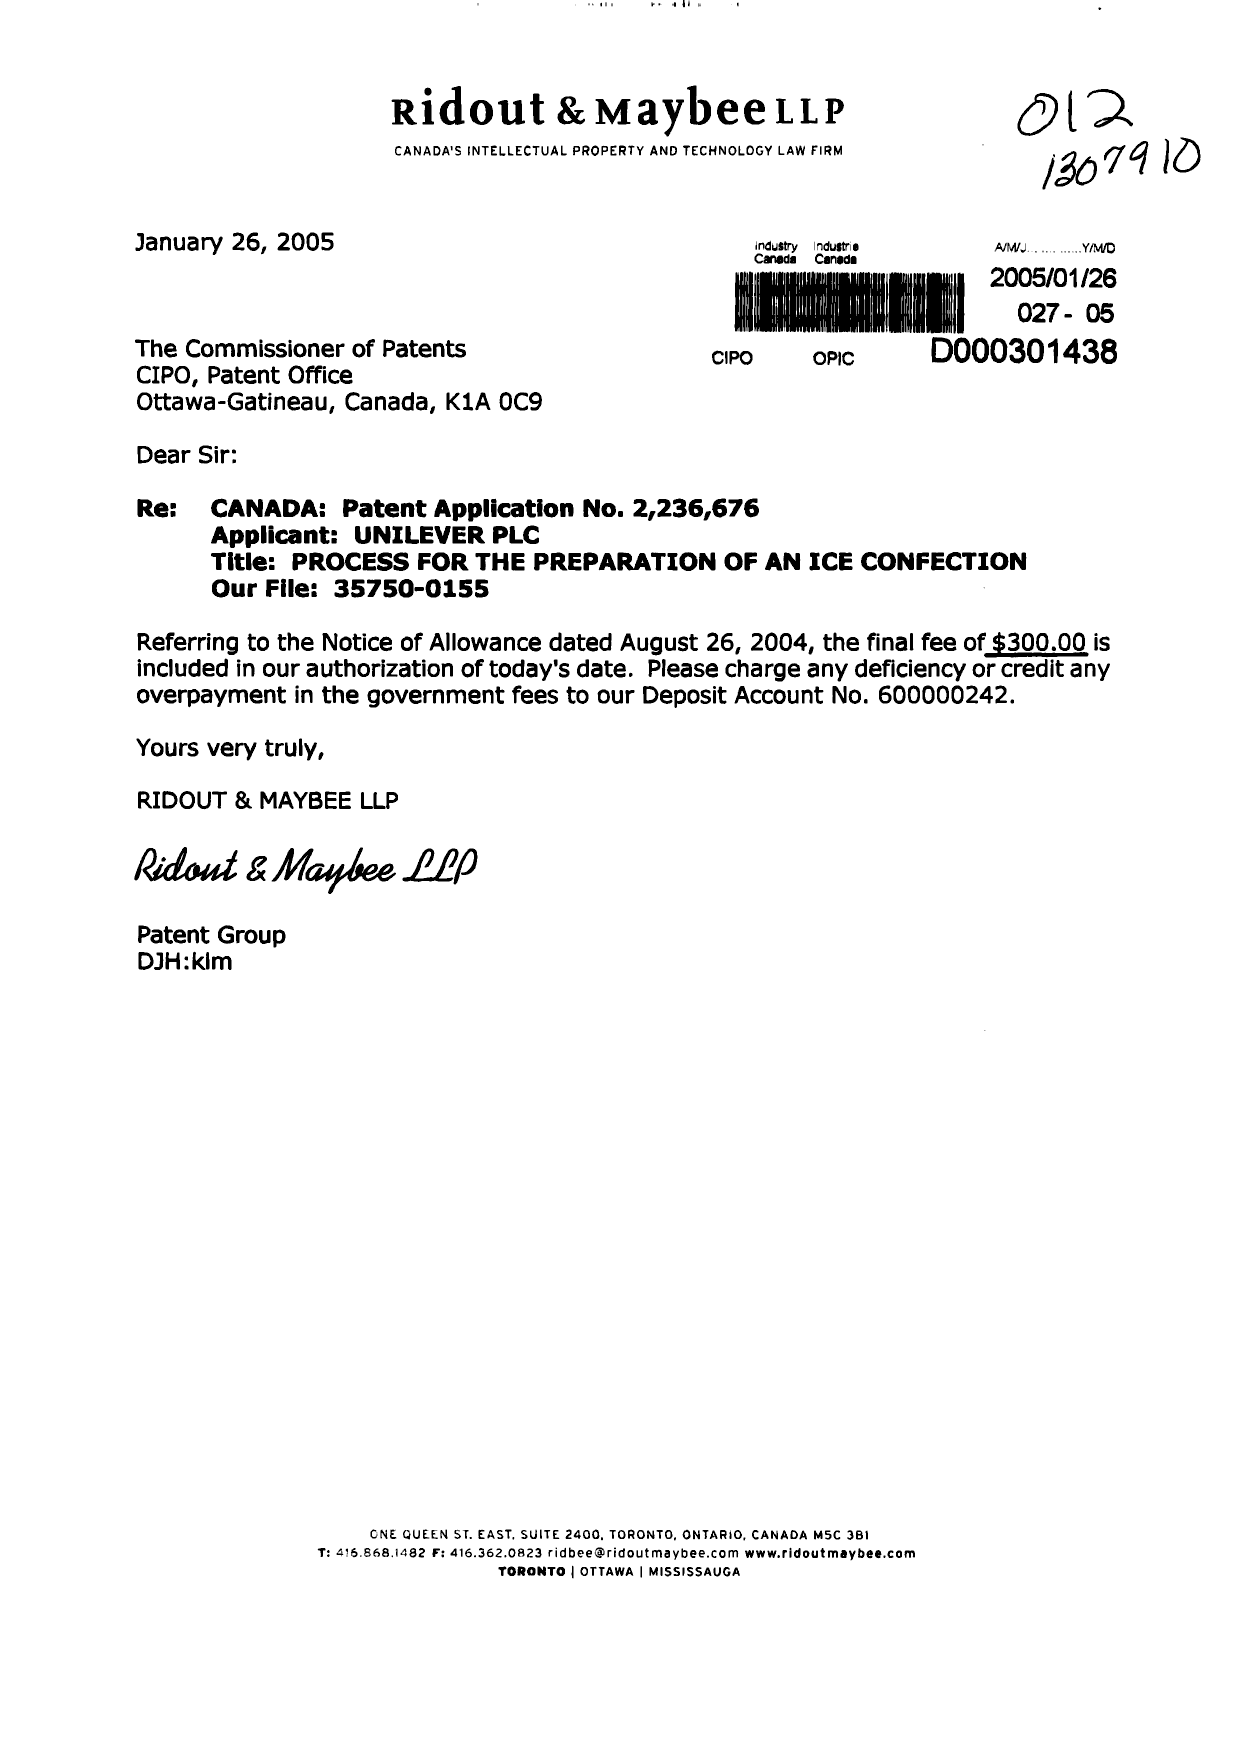 Canadian Patent Document 2236676. Correspondence 20050126. Image 1 of 1